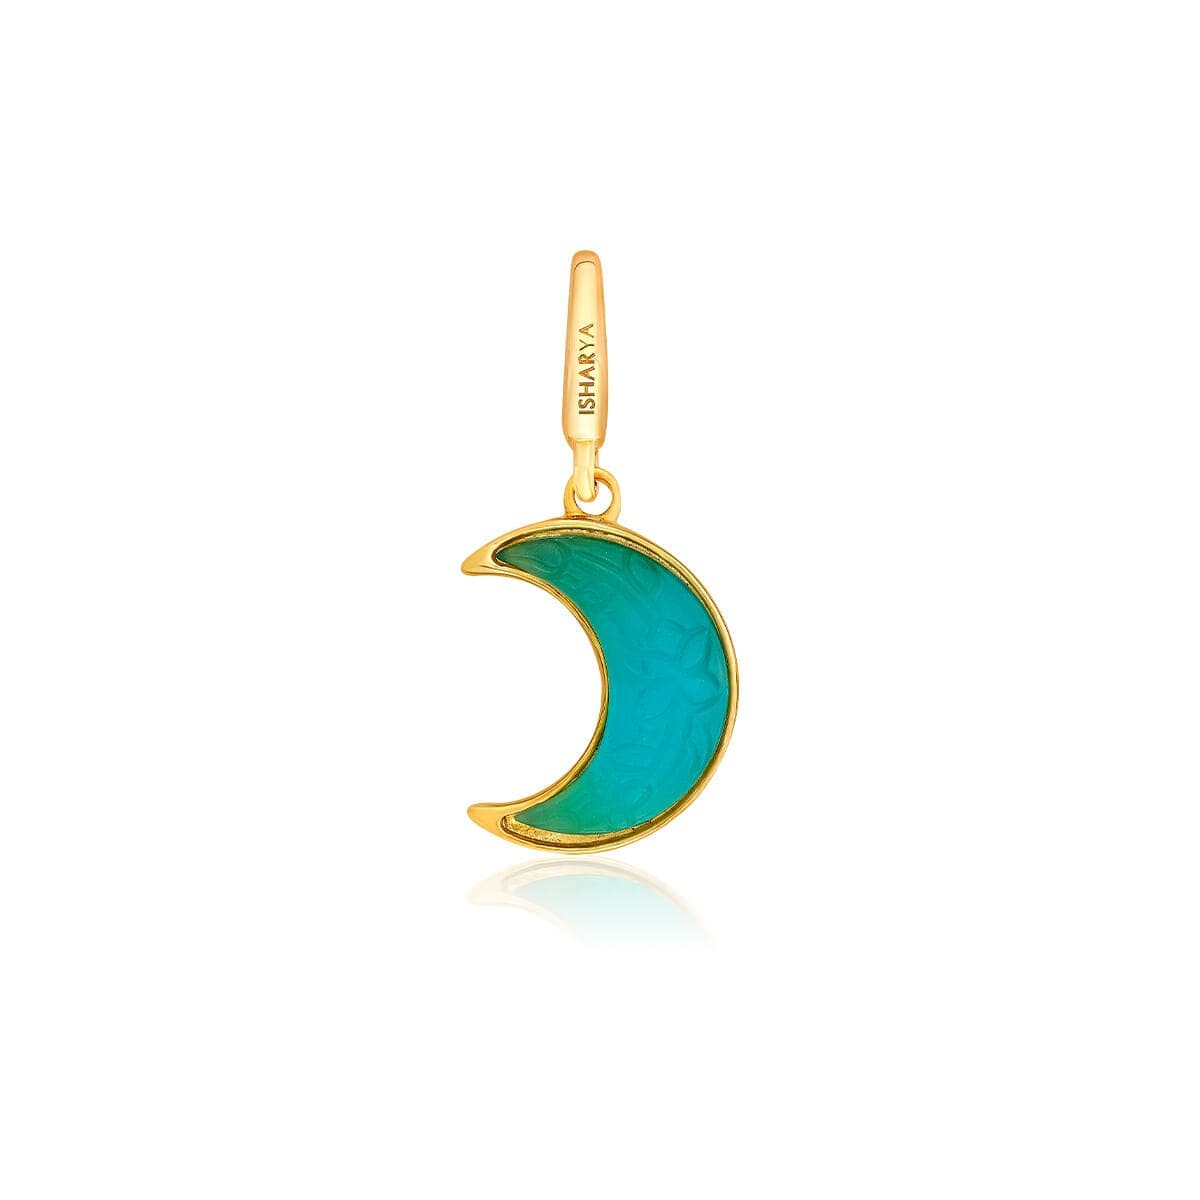 Crescent Moon Charm - Isharya | Modern Indian Jewelry